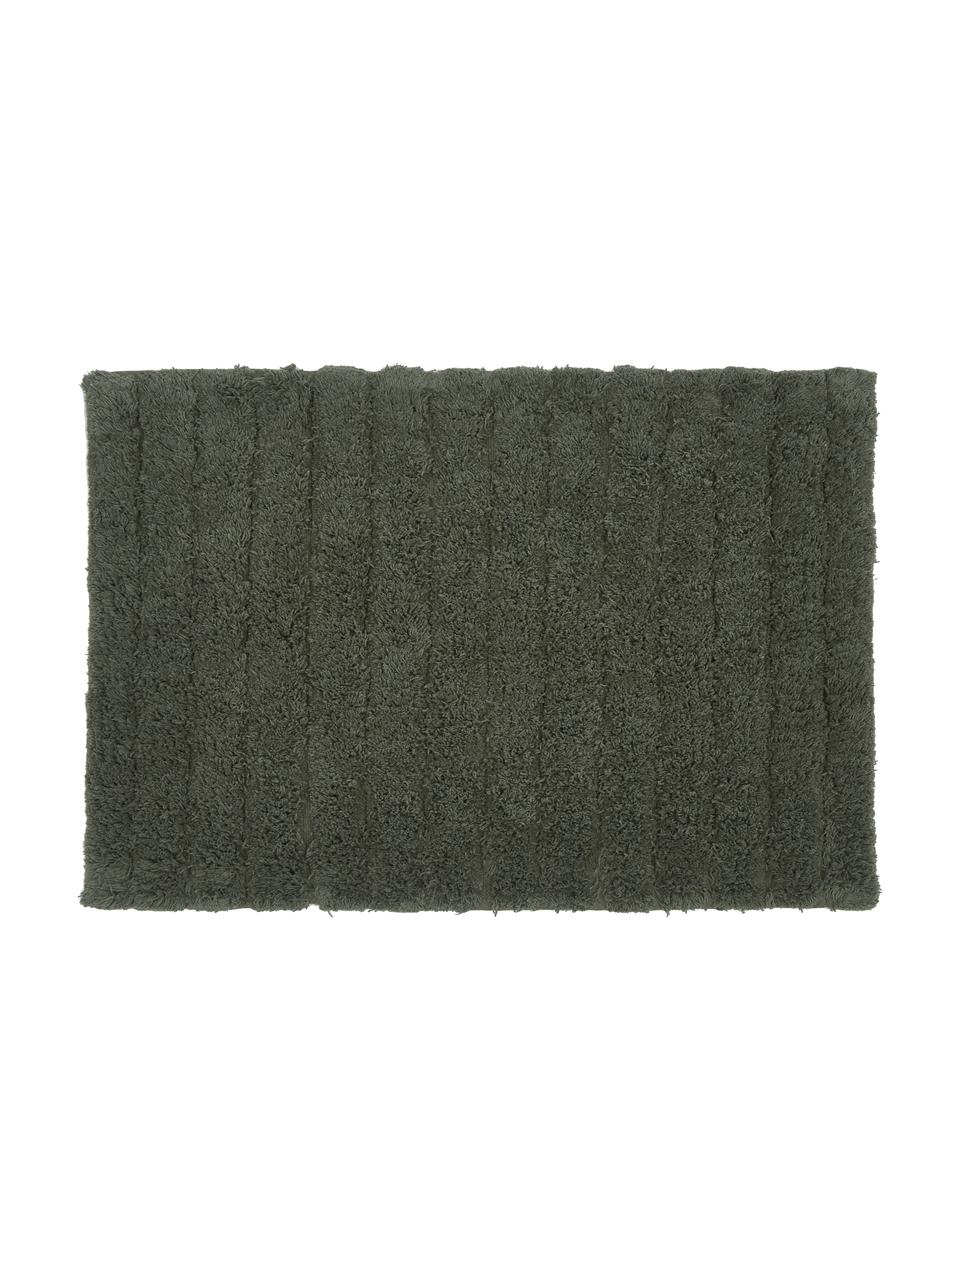 Alfombrilla de baño Board, 100% algodón
Gramaje superior 1900 g/m², Verde salvia, An 60 x L 90 cm